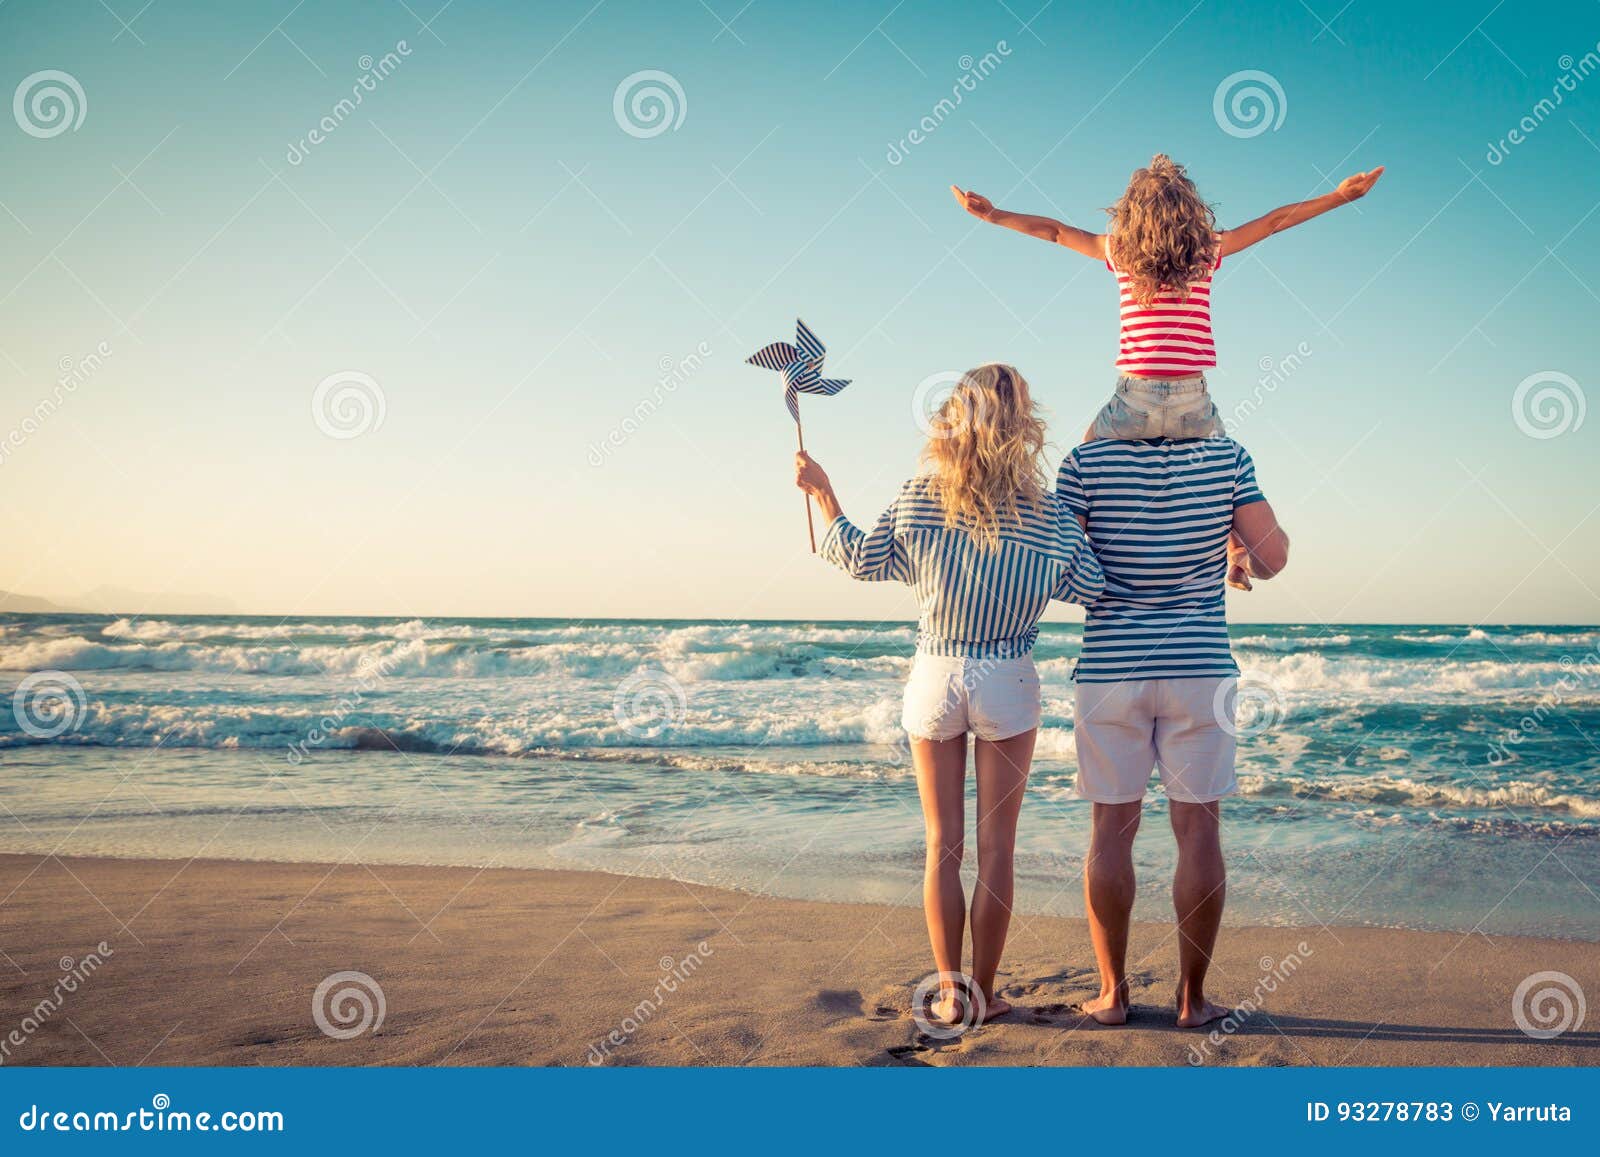 happy family having fun on summer vacation